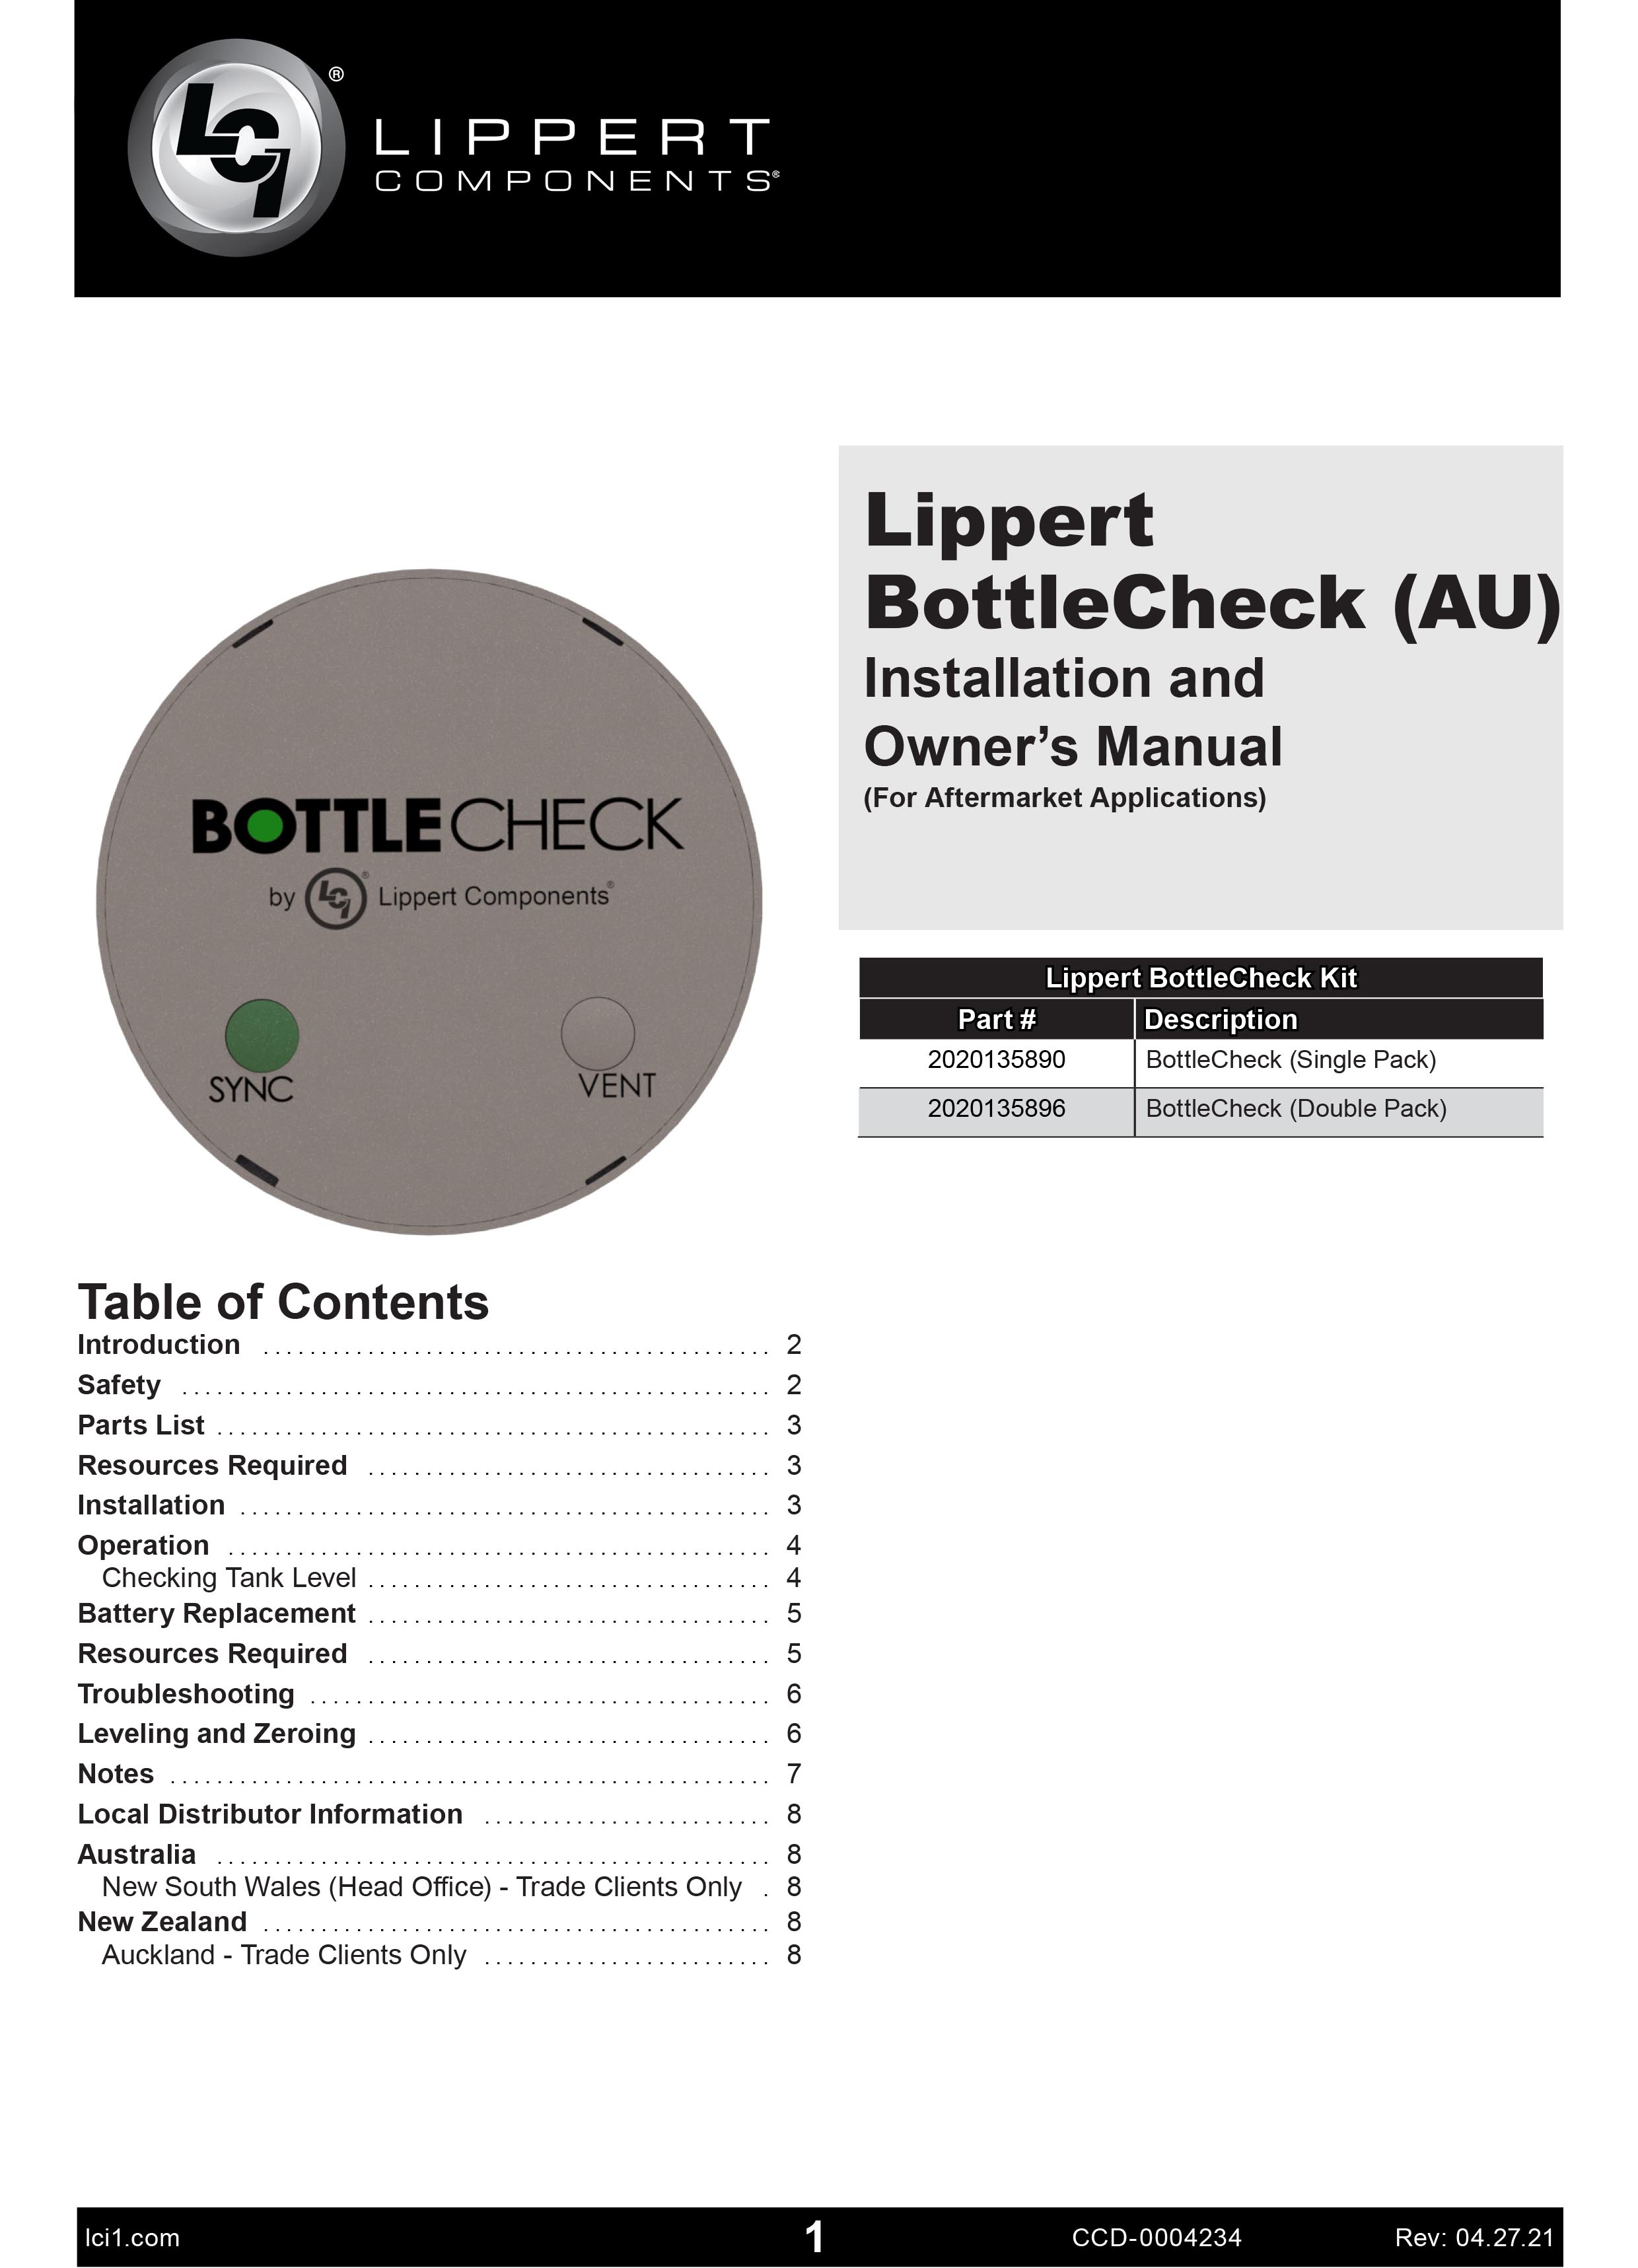 the BottleCheck Manual